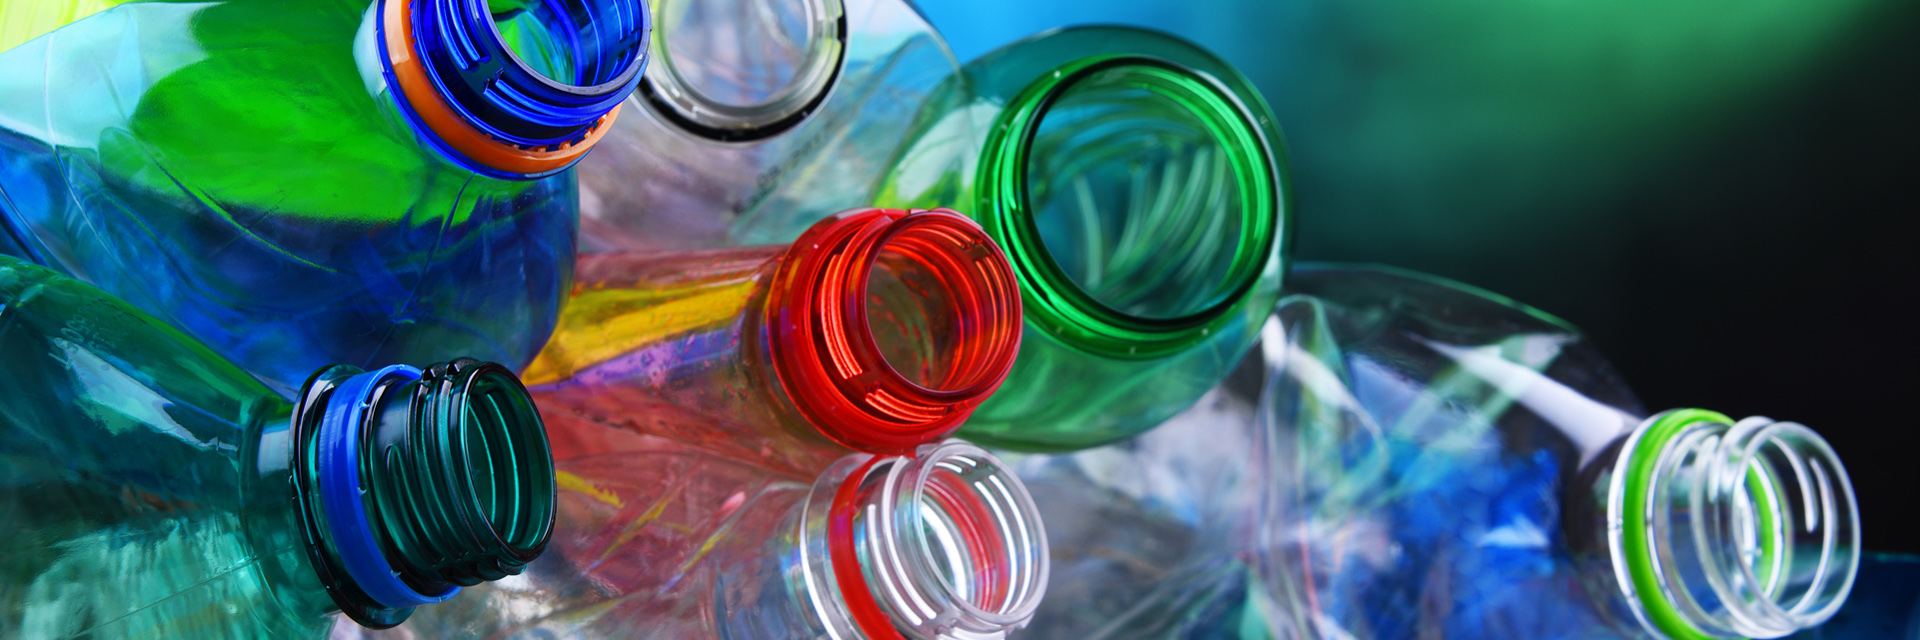 Colourful plastic bottles